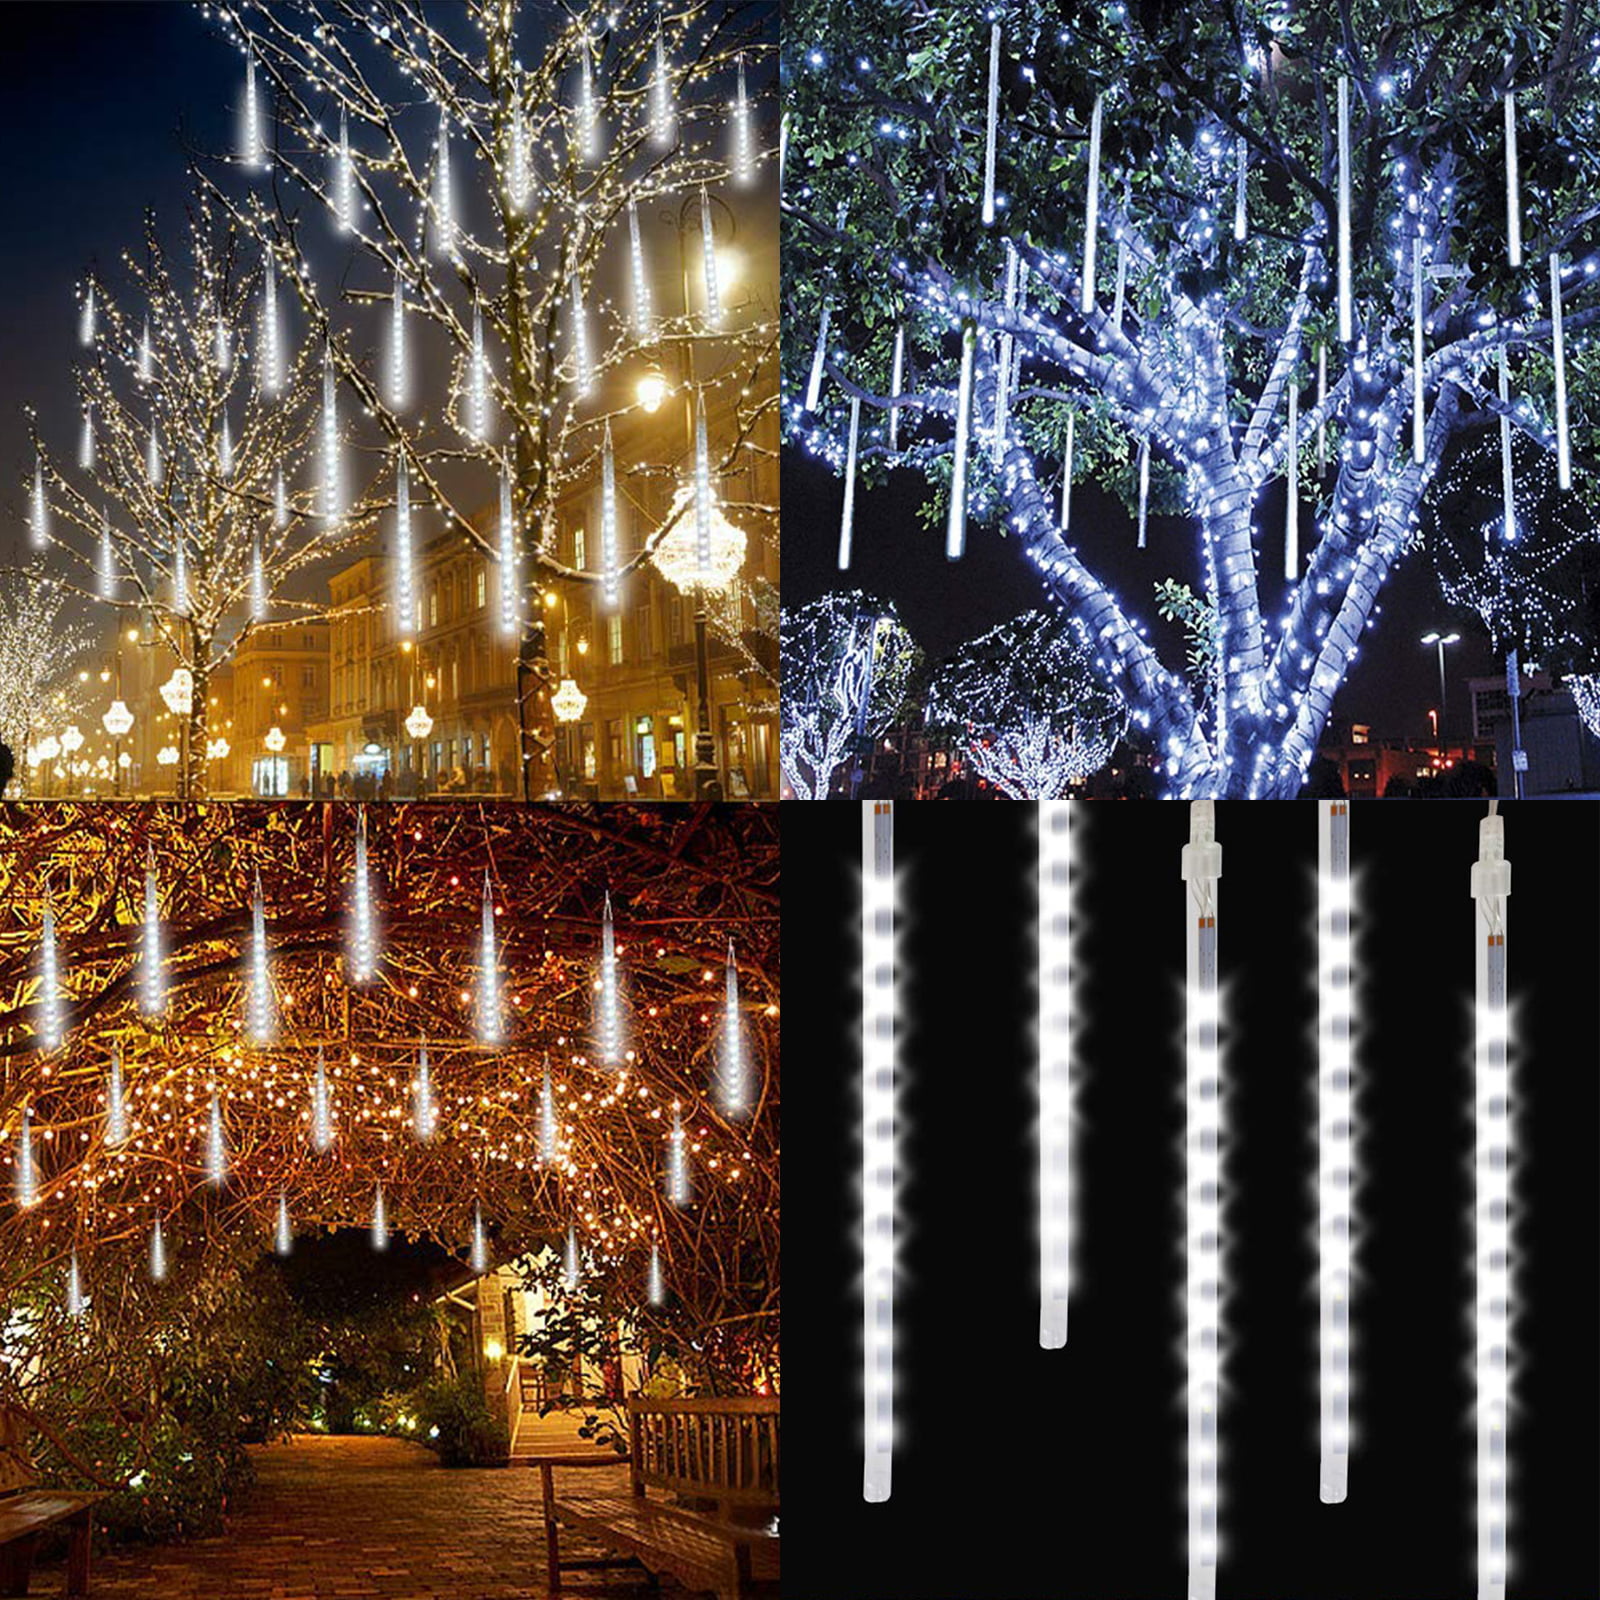 30cm 144 LED Lights Meteor Shower Rain 8 Tube Xmas Snowfall Tree Outdoor Light 